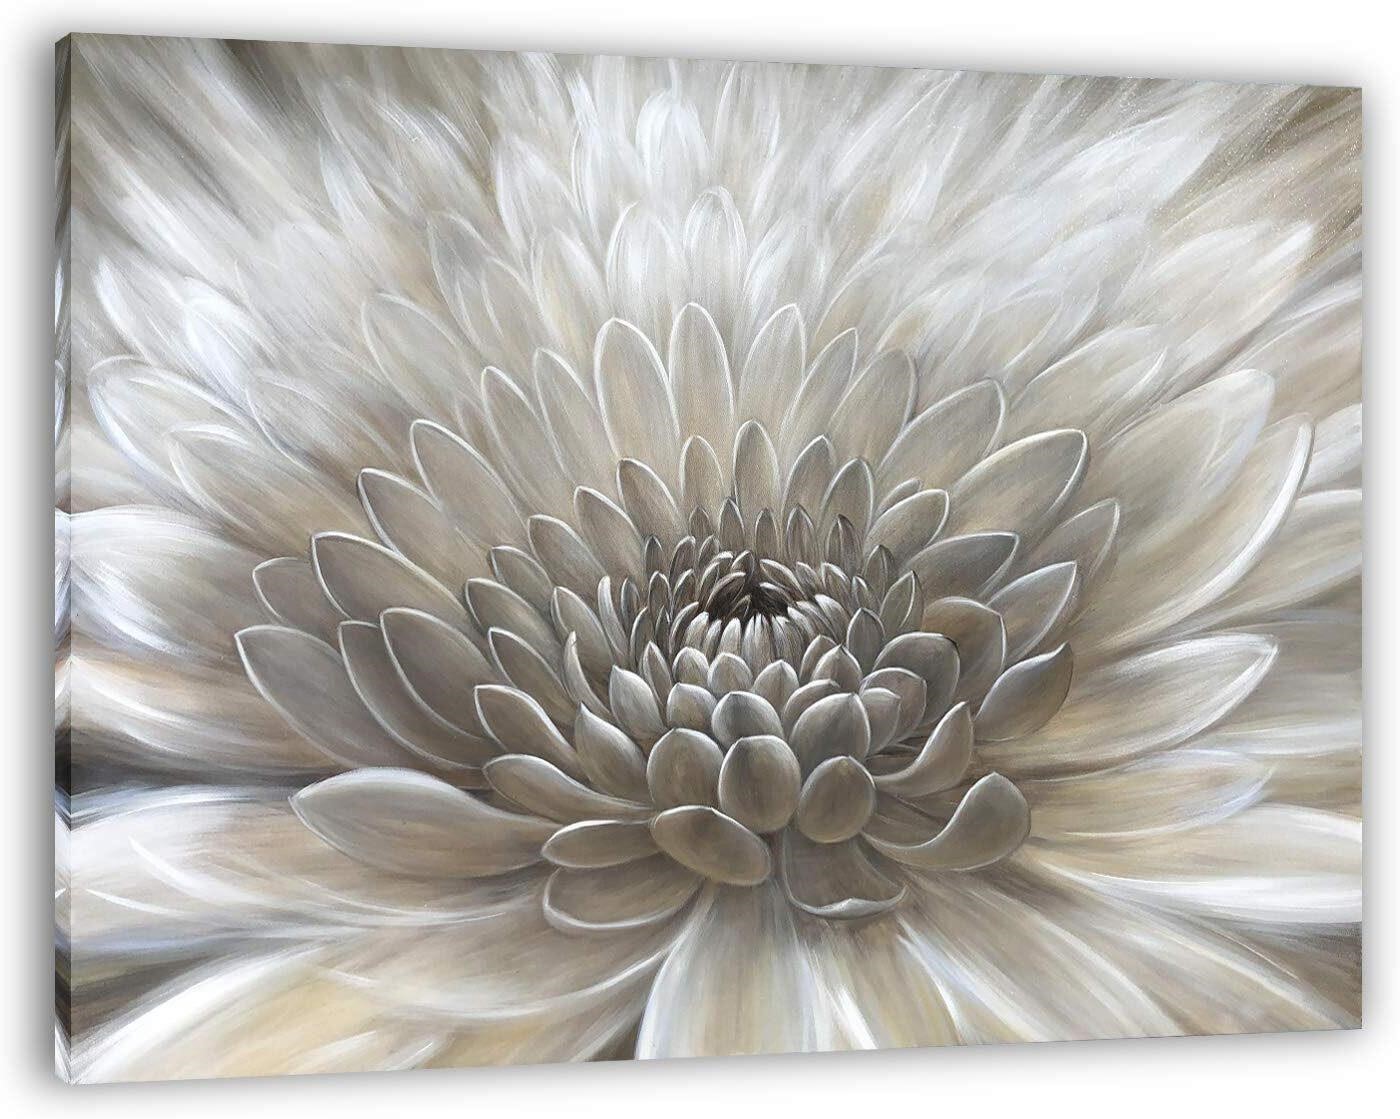 $90  Yihui Arts White Flower Artwork  30x40IN